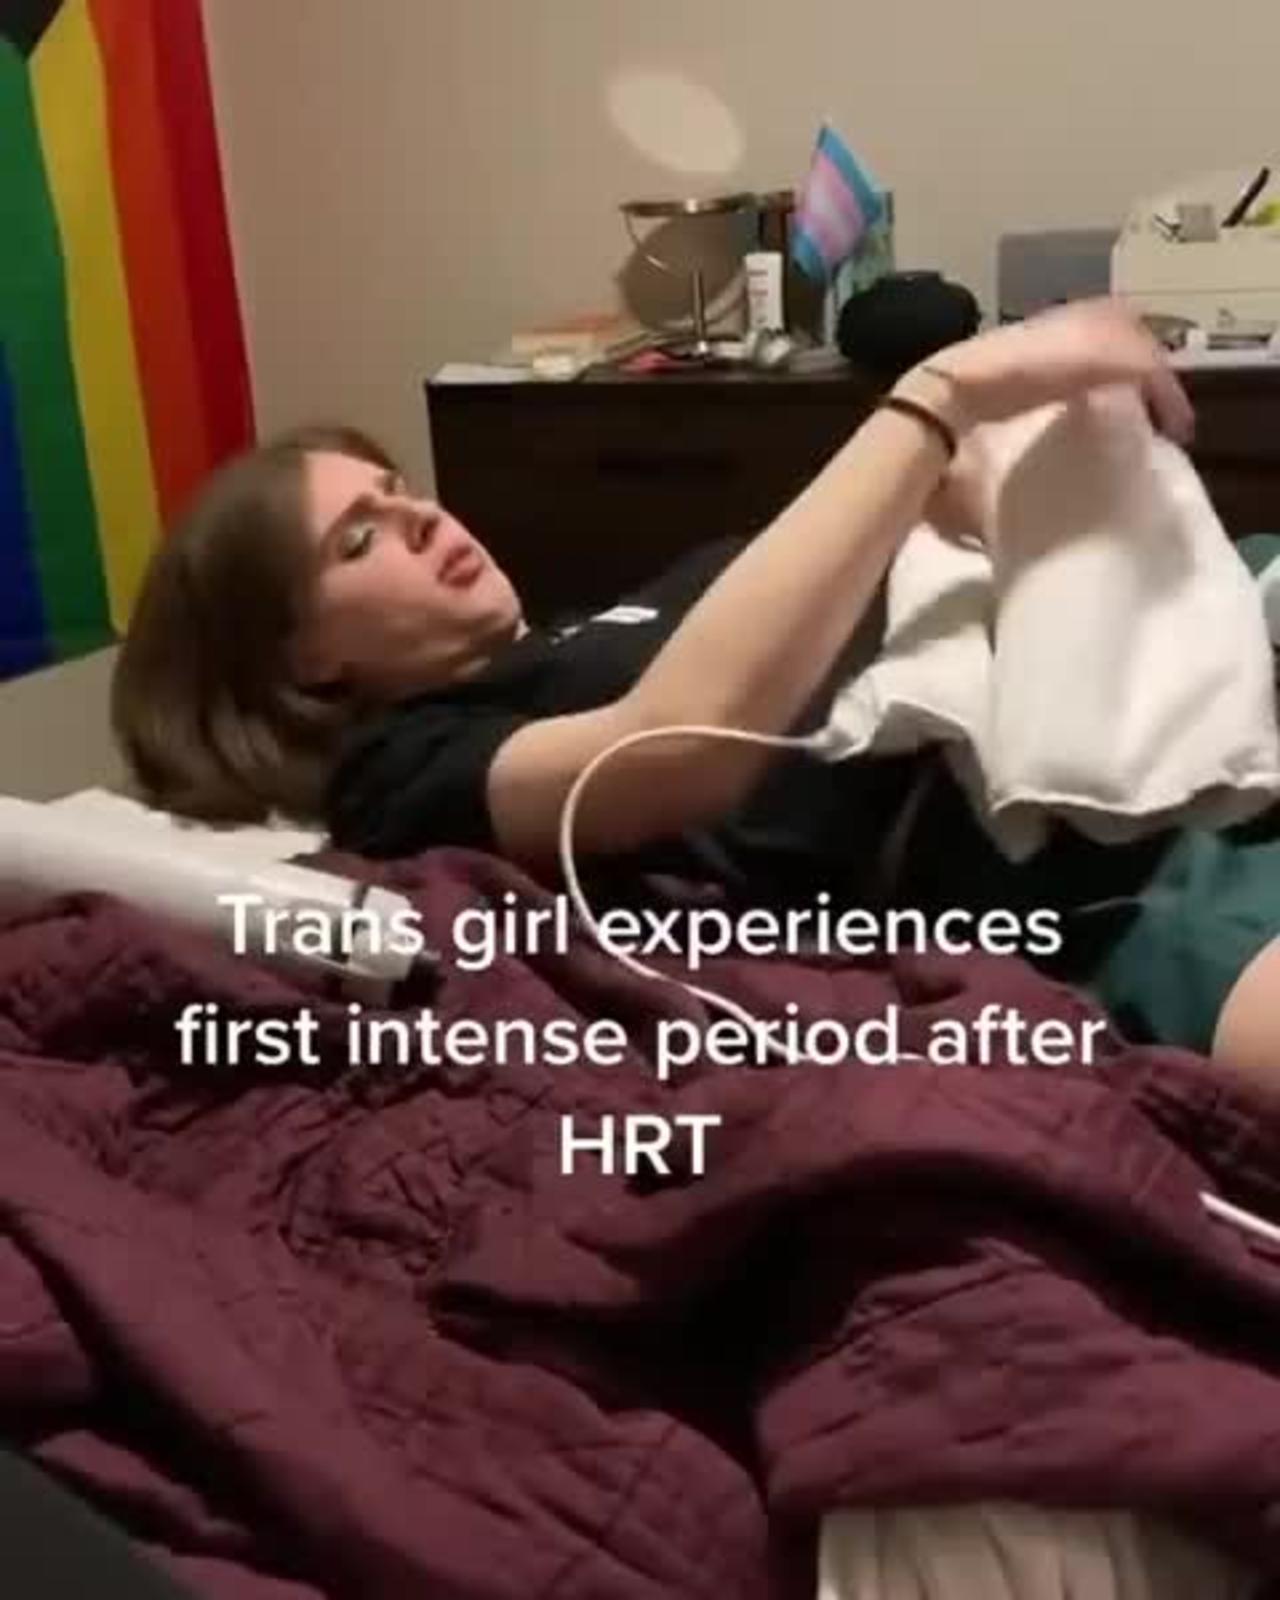 Trans girl experiences first intense period after HRT